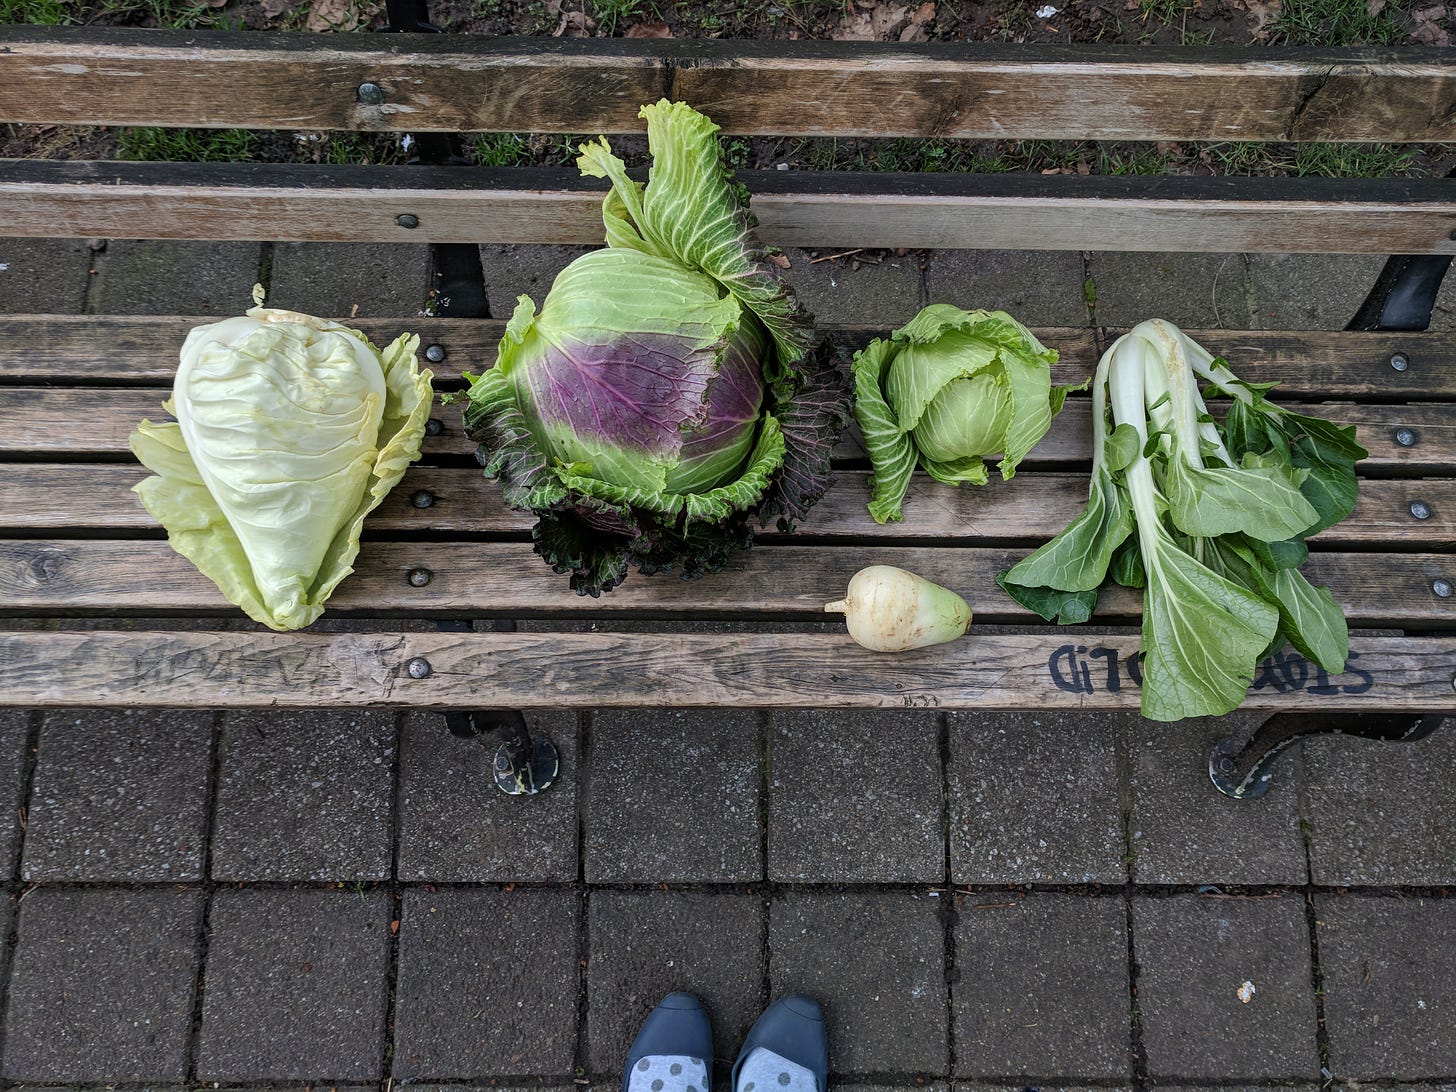 farmers market photo of veg on a bench